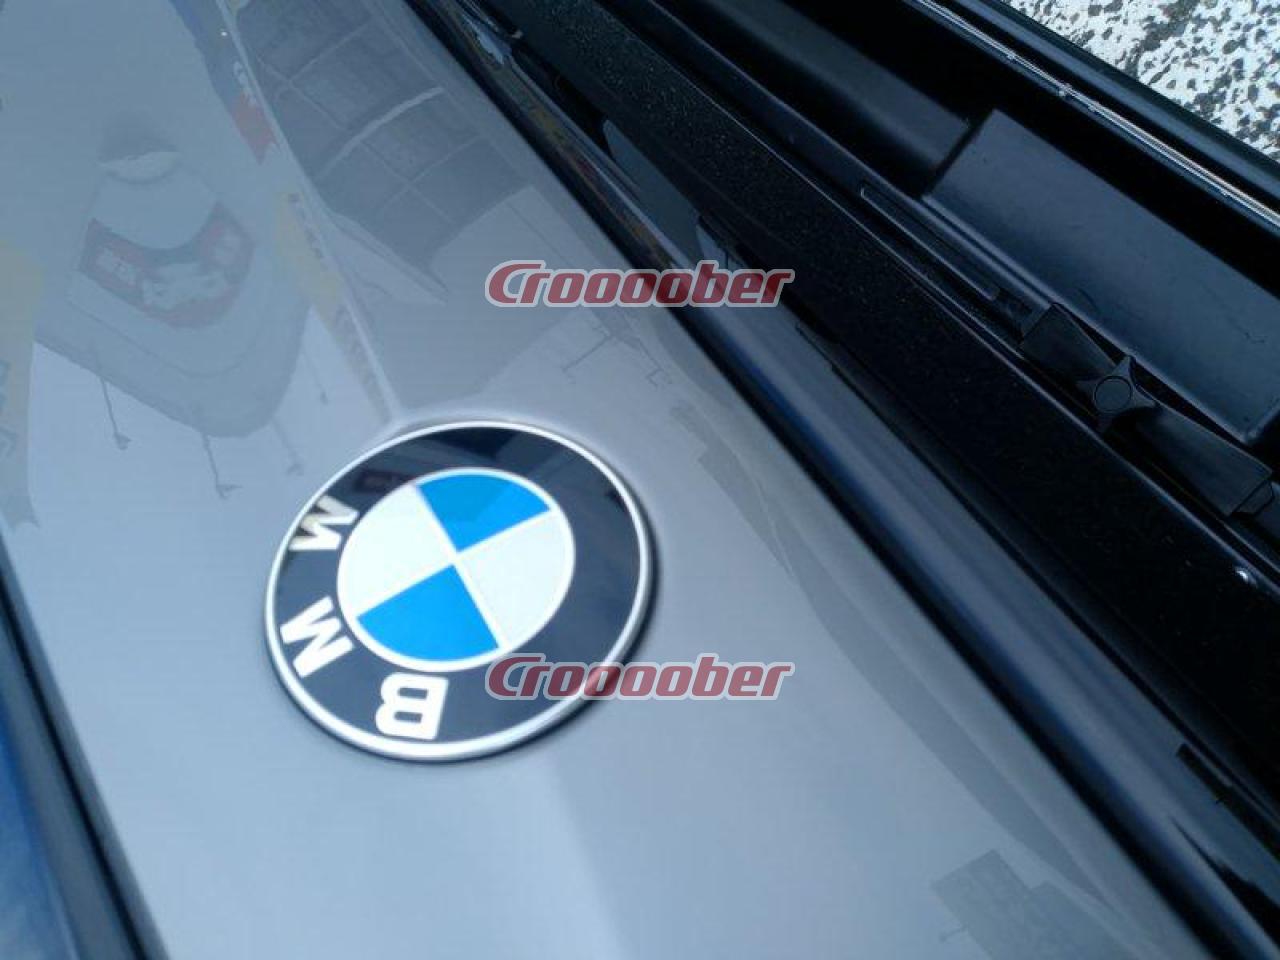 BMW X3】 BMW純正ルーフボックス420 + BMW純正ルーフキャリア(レー